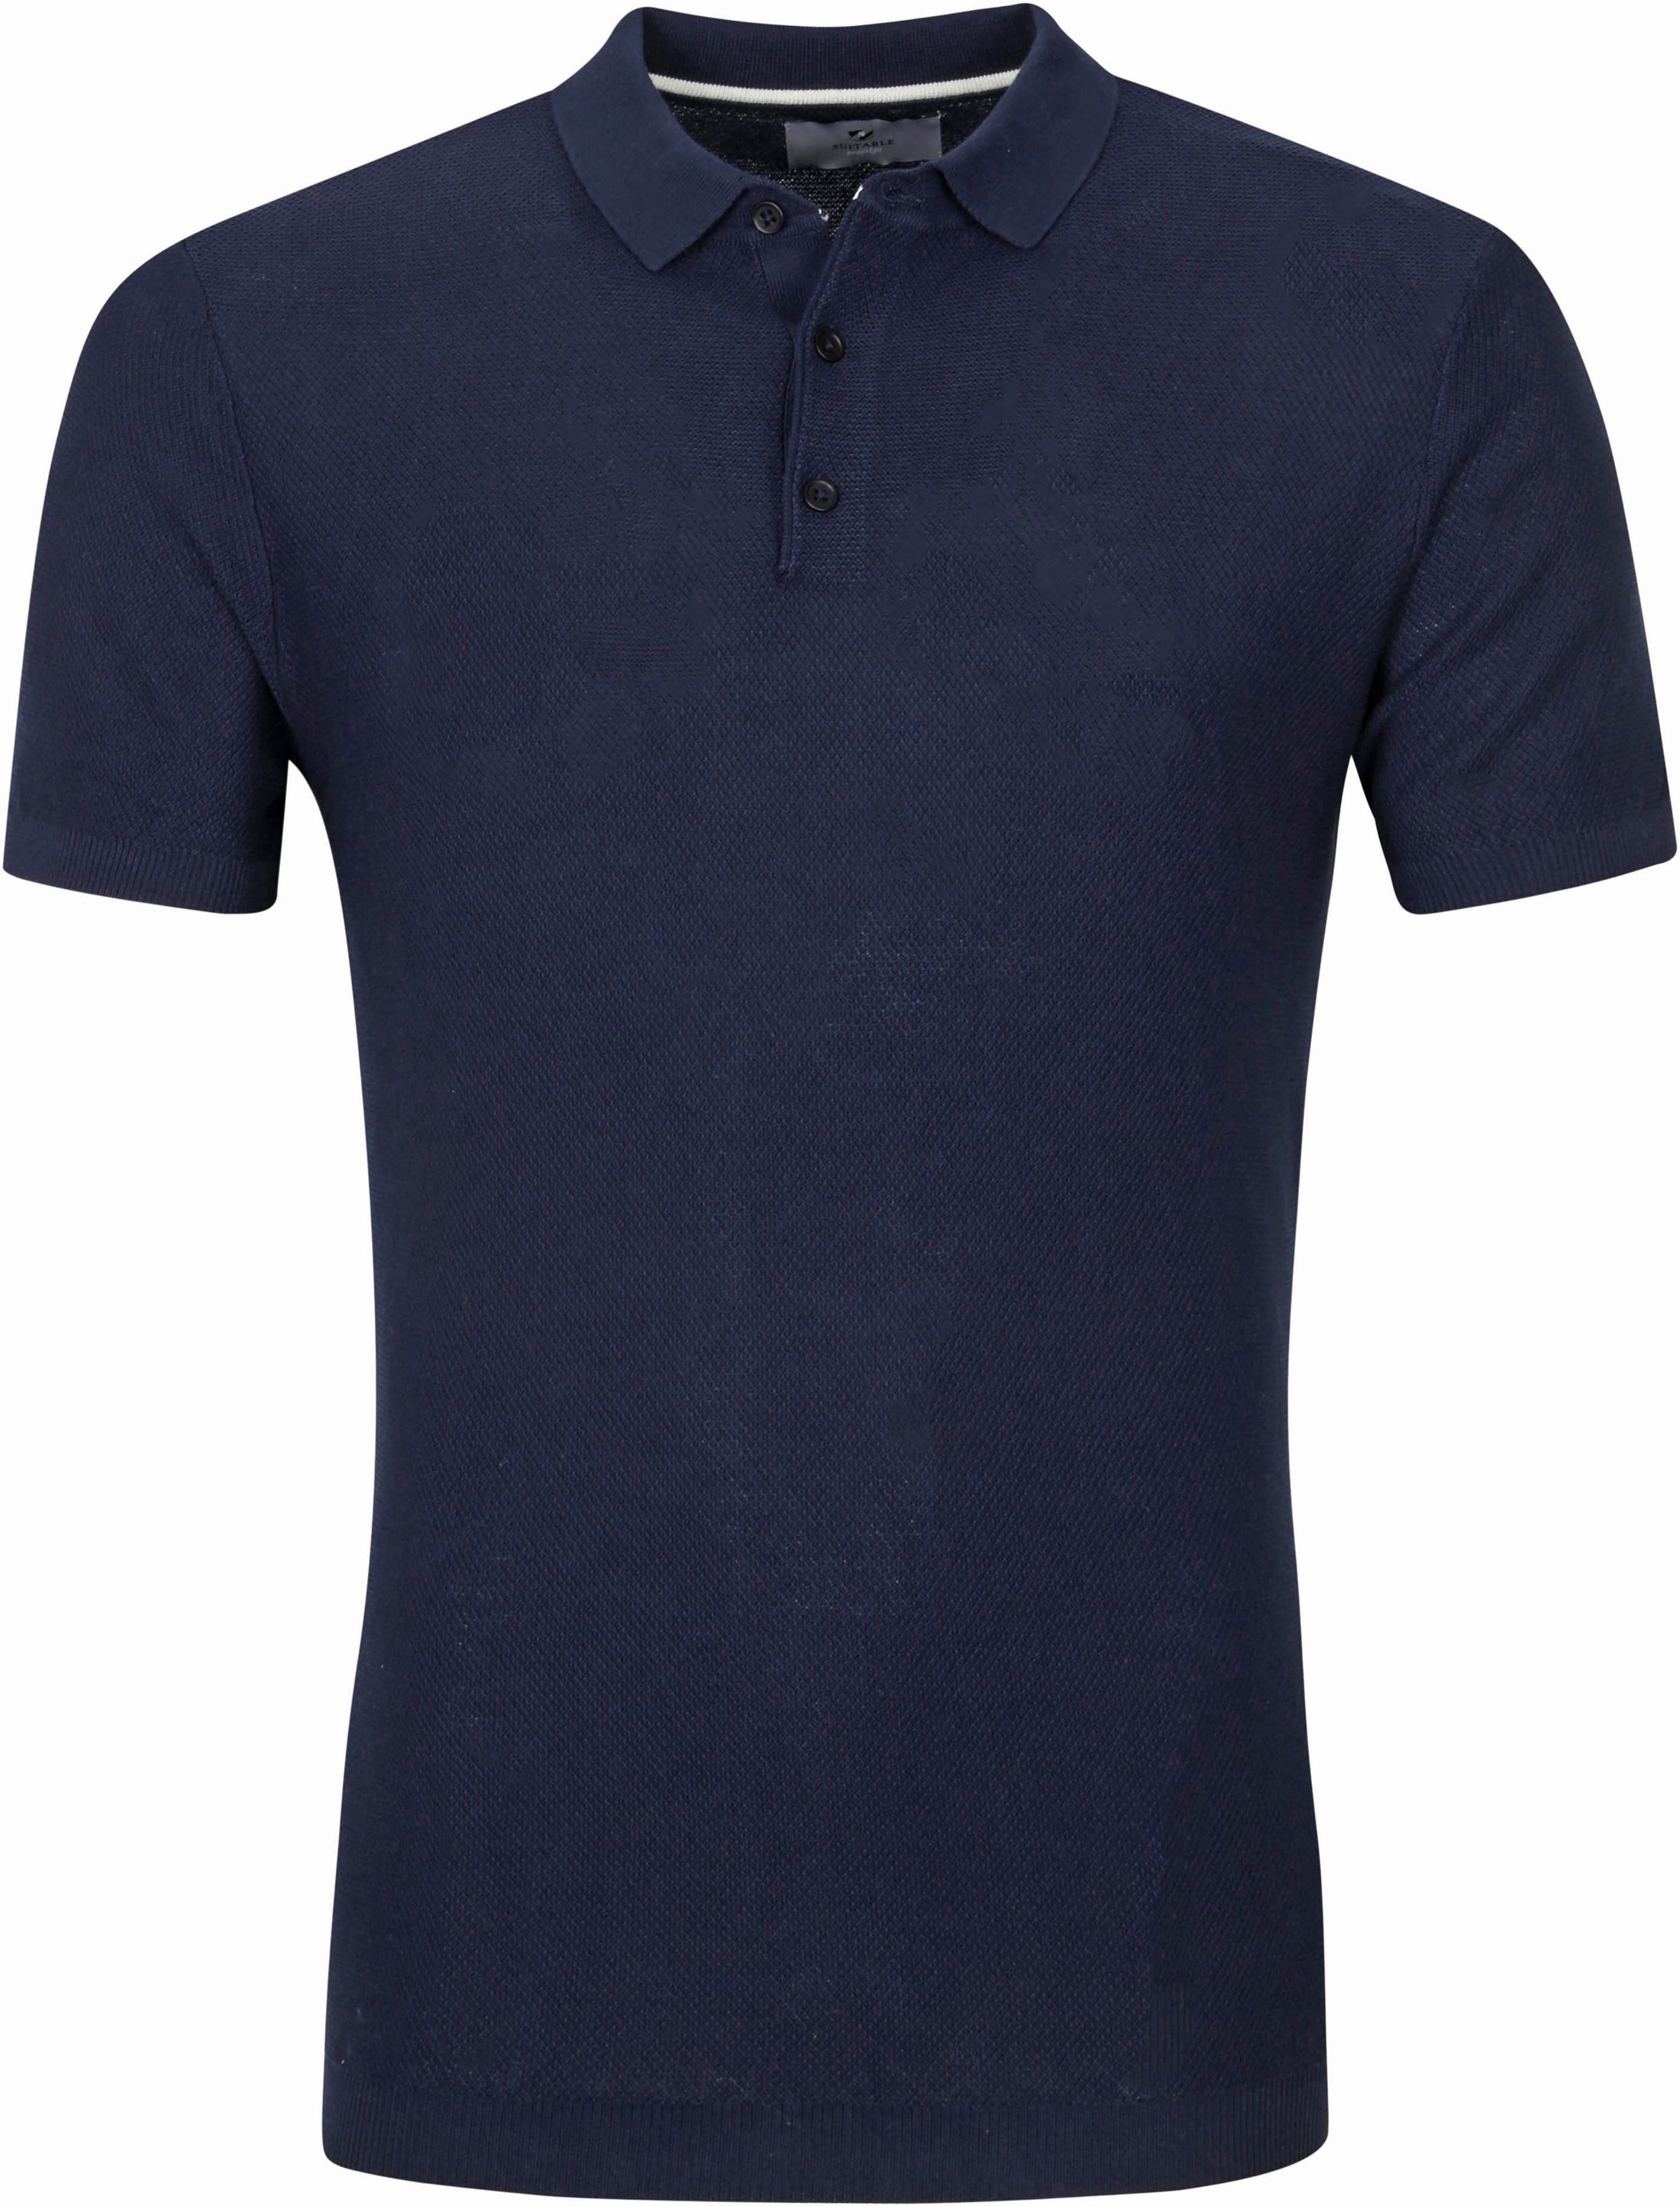 Suitable Prestige  Jerry Polo Shirt Navy Blue Dark Blue size L